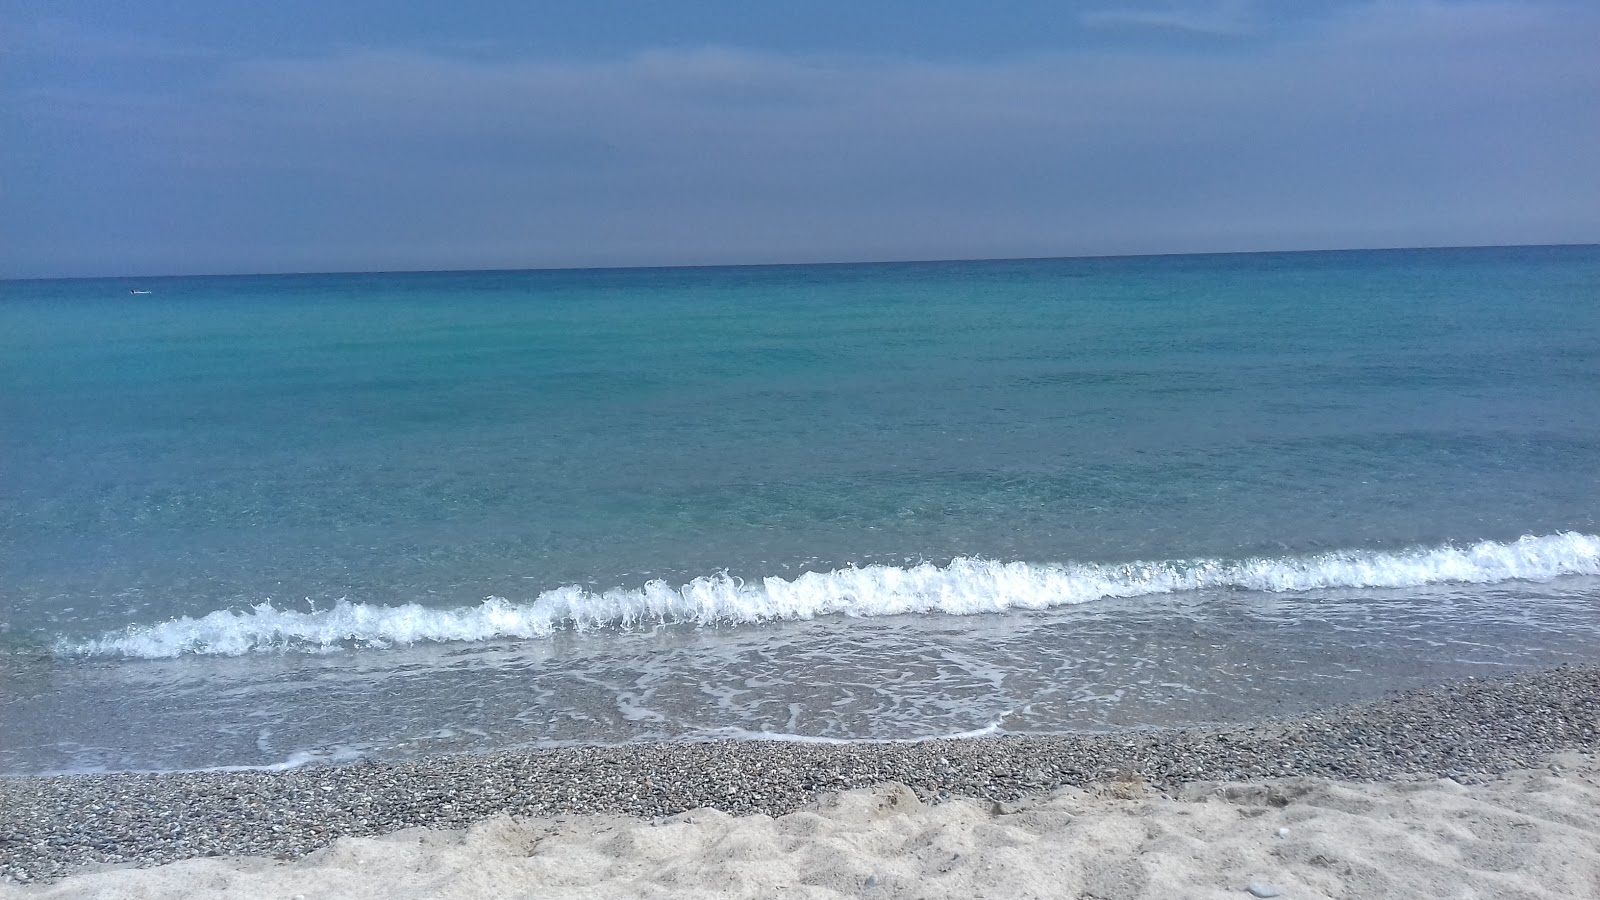 Photo of Simeri Mare - Sena II with long straight shore